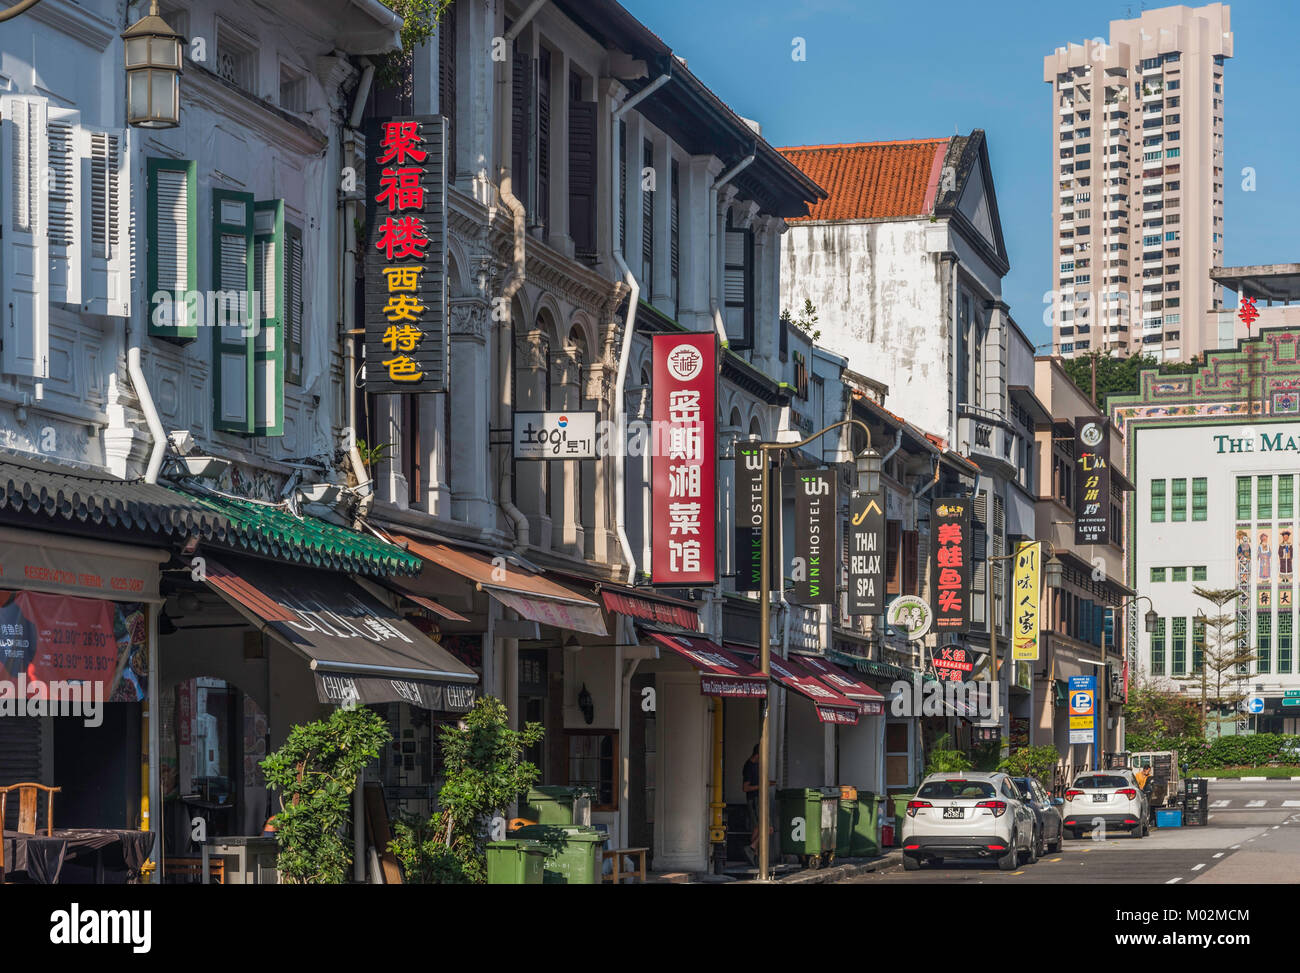 Moschea Street, Chinatown, Singapore Foto Stock